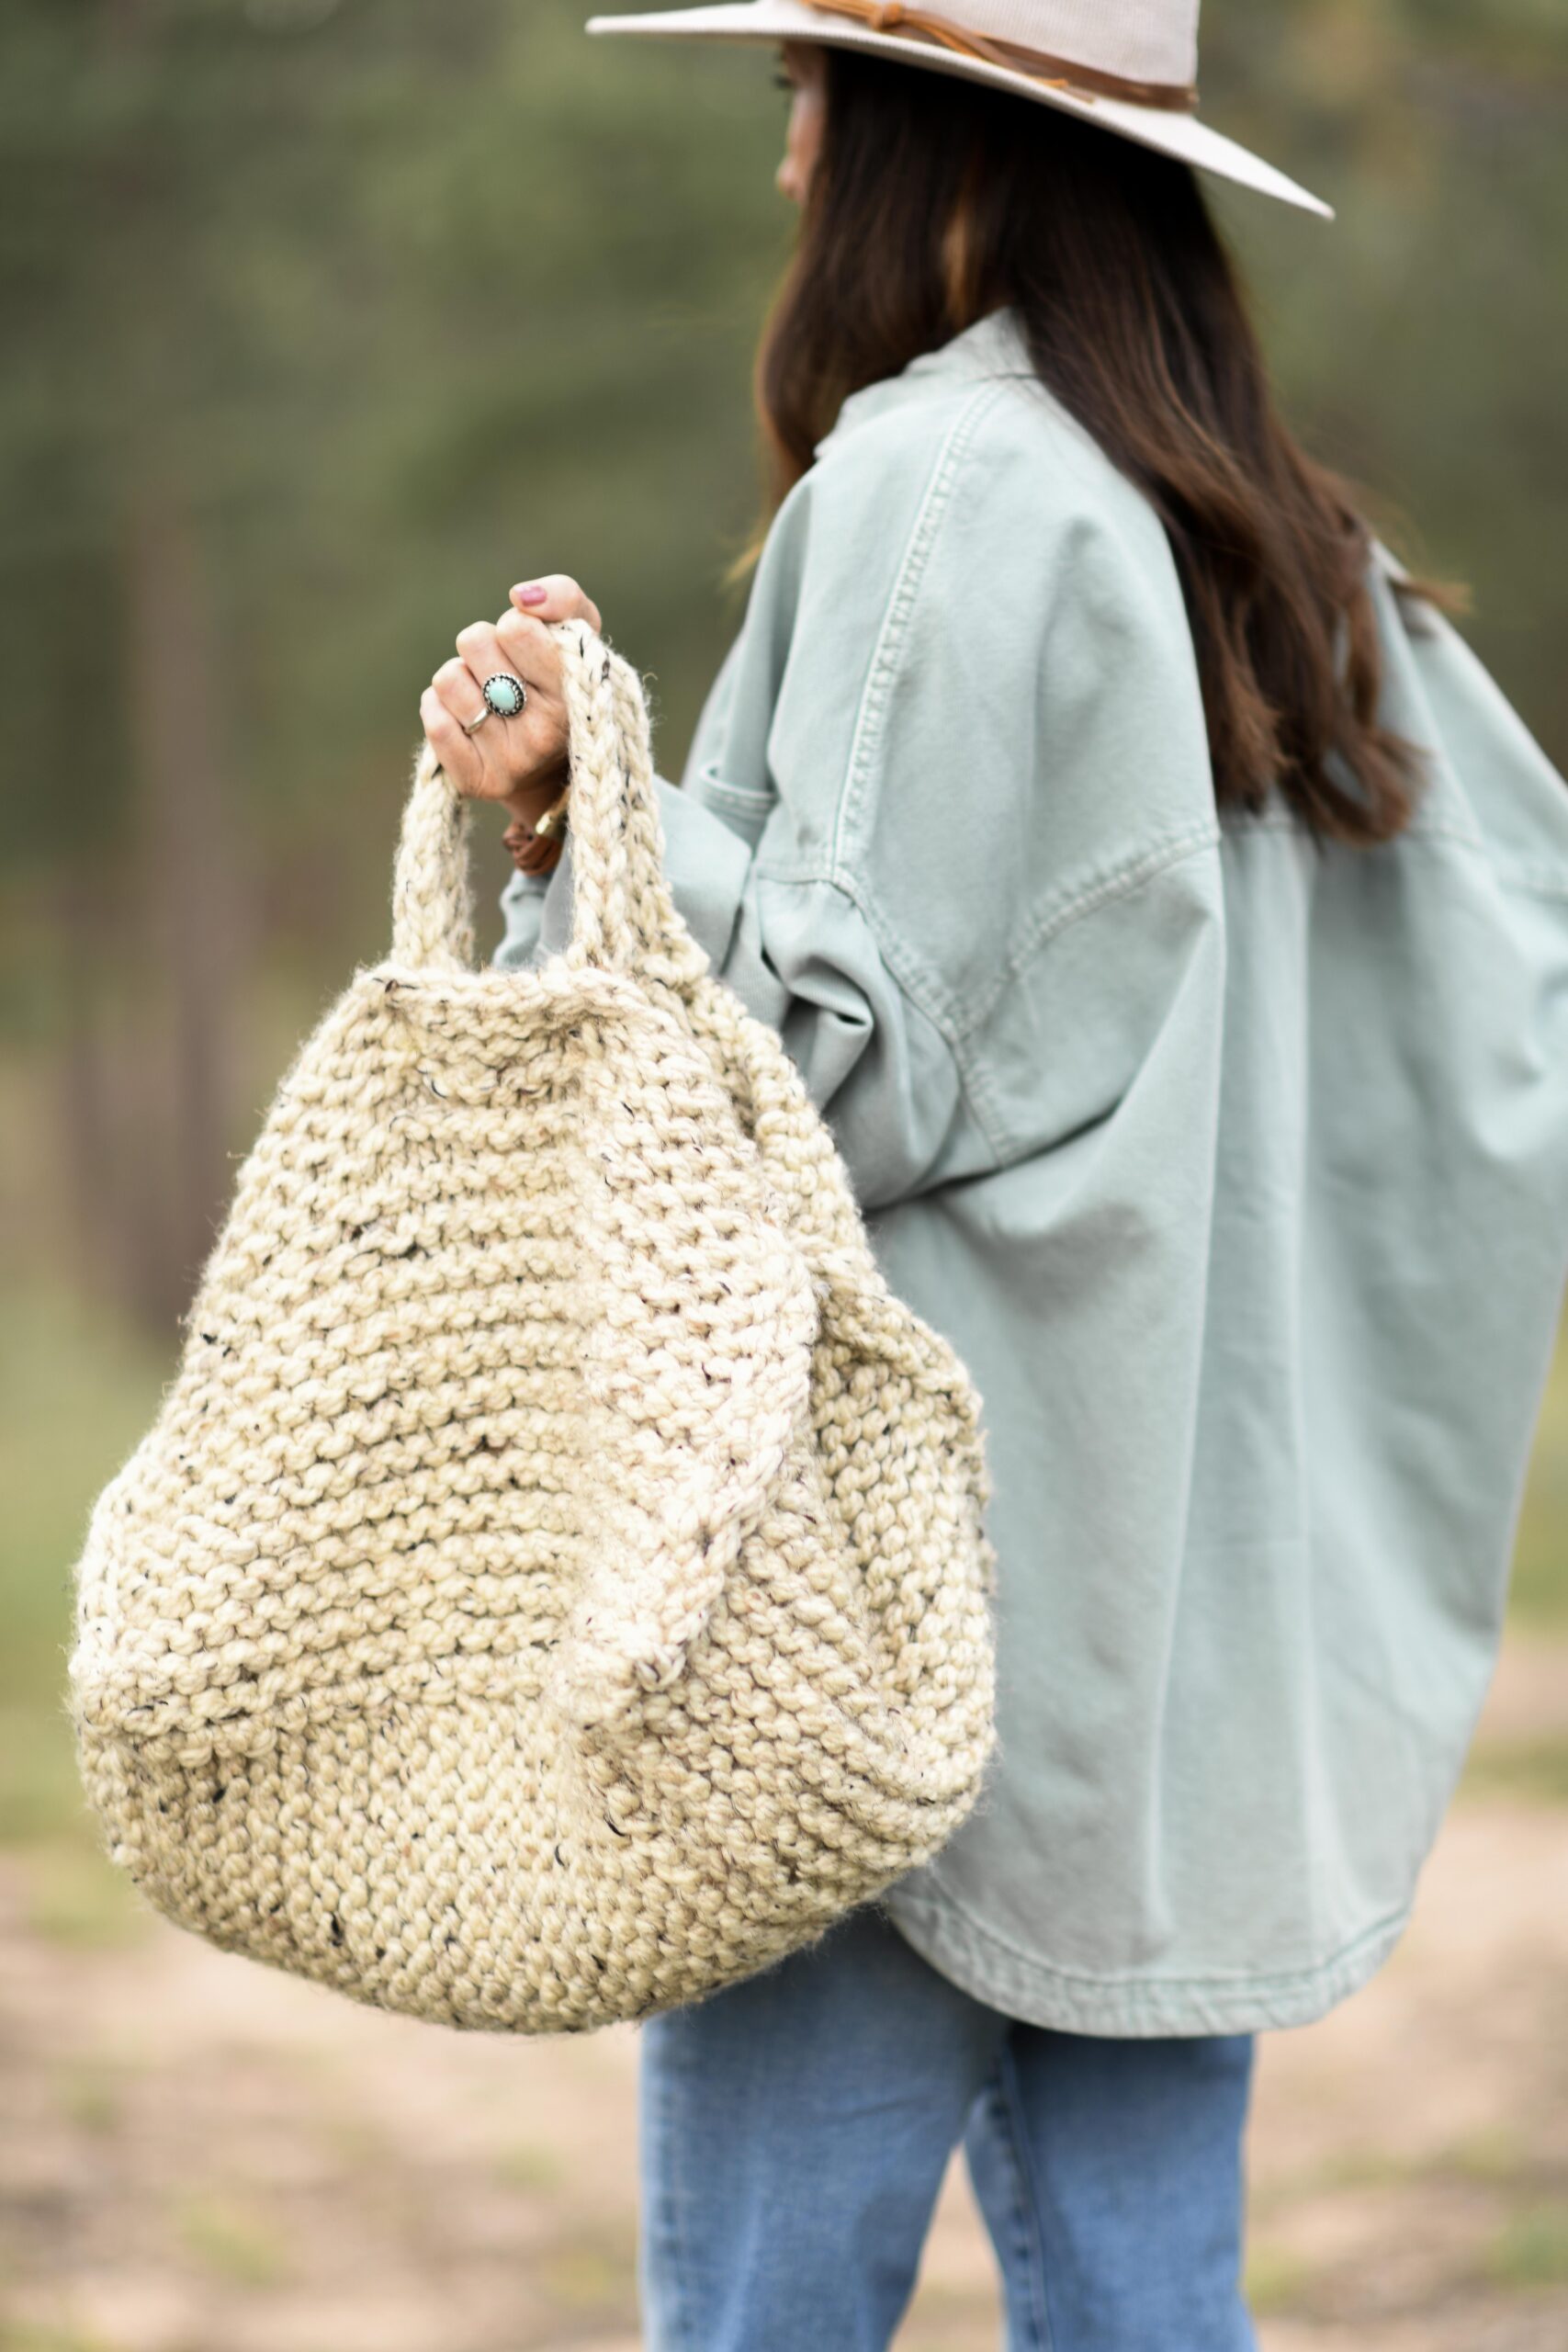 SEWING PATTERN Sew Handbag Sewing Tote - Knitting Bag Organizer